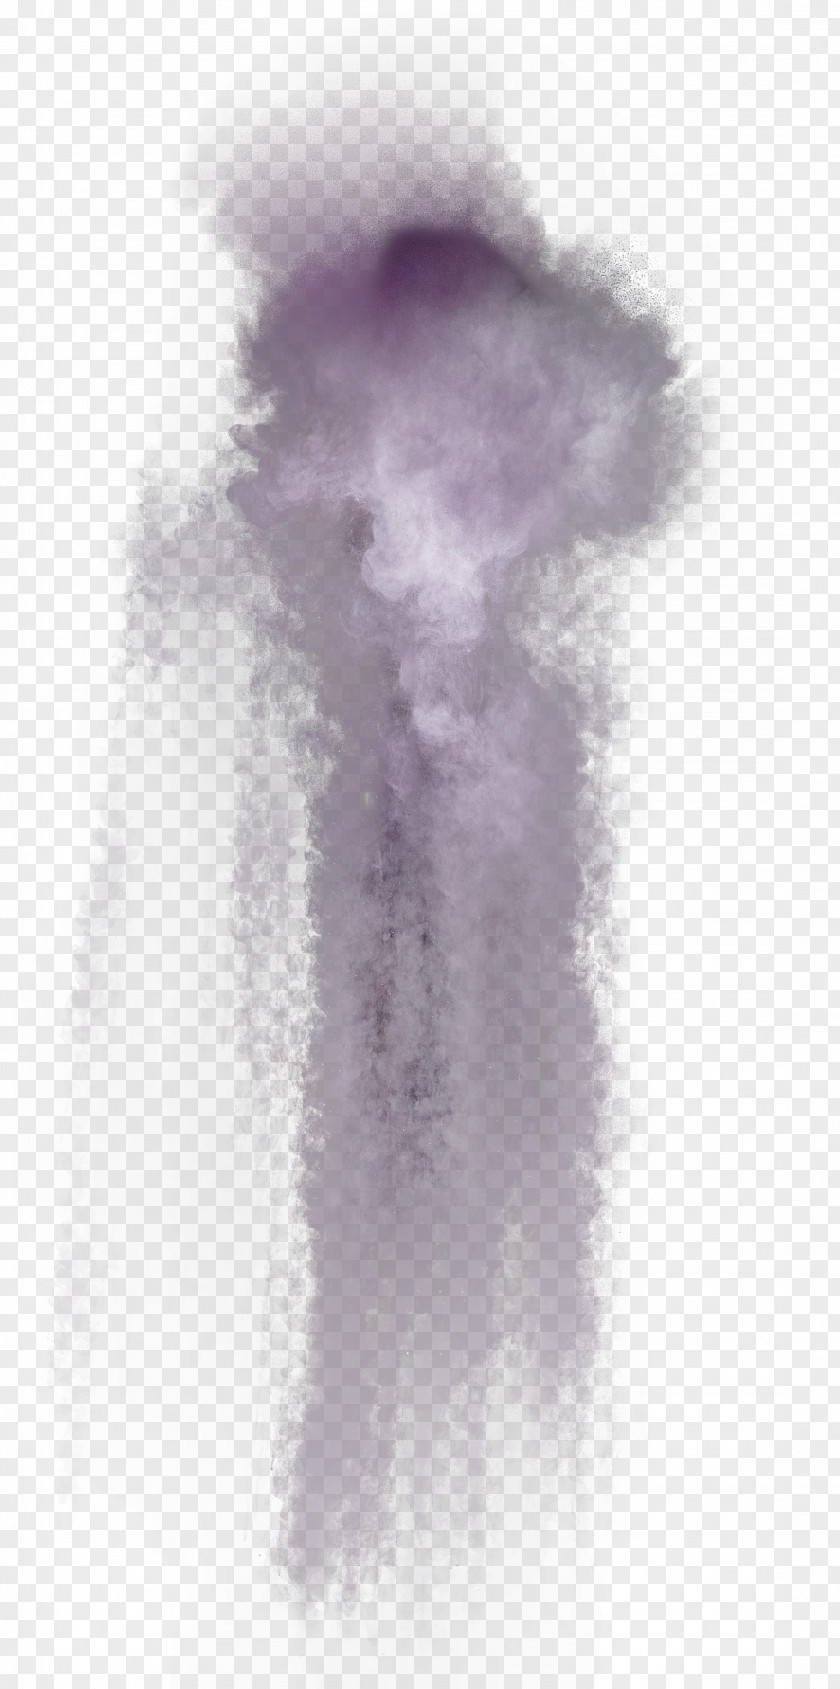 Purple Powder Explosive Material Google Images Dust Explosion PNG